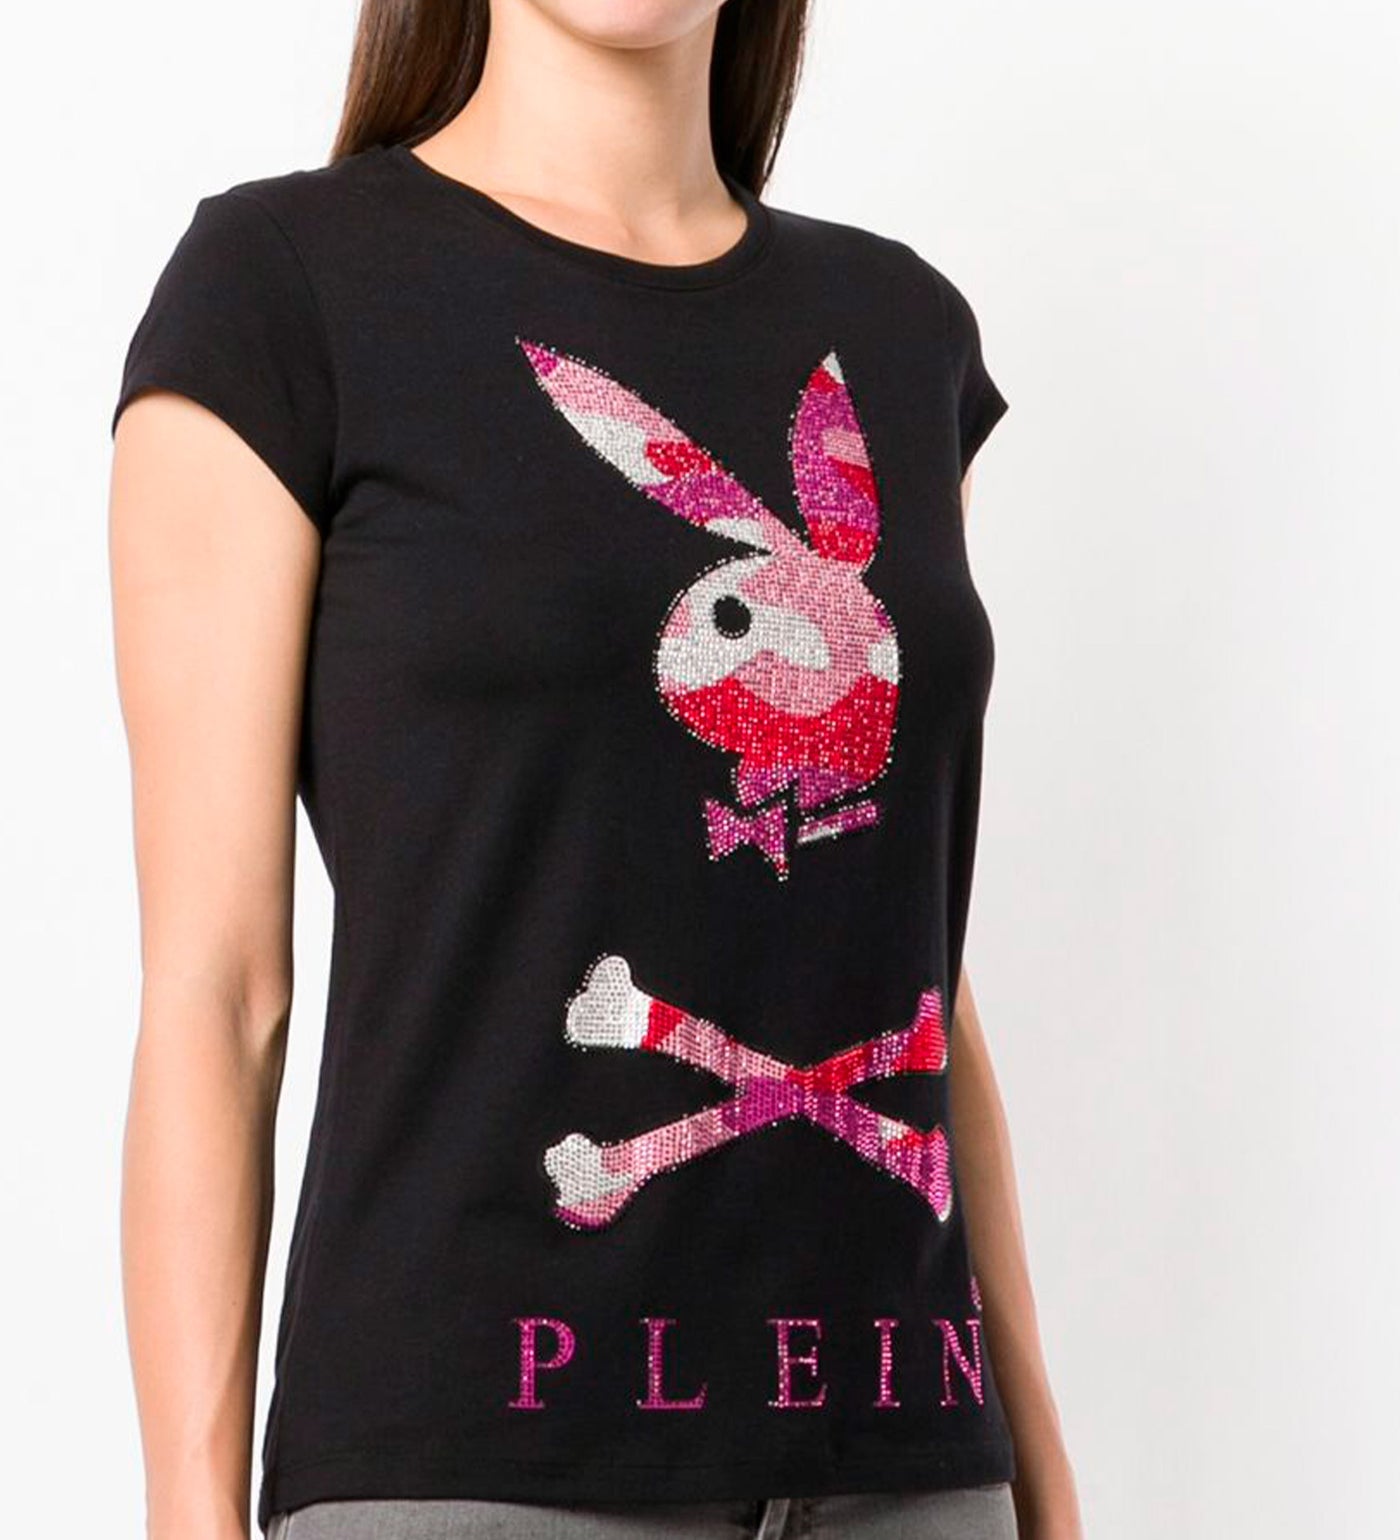 Playboy X Plein T-shirt